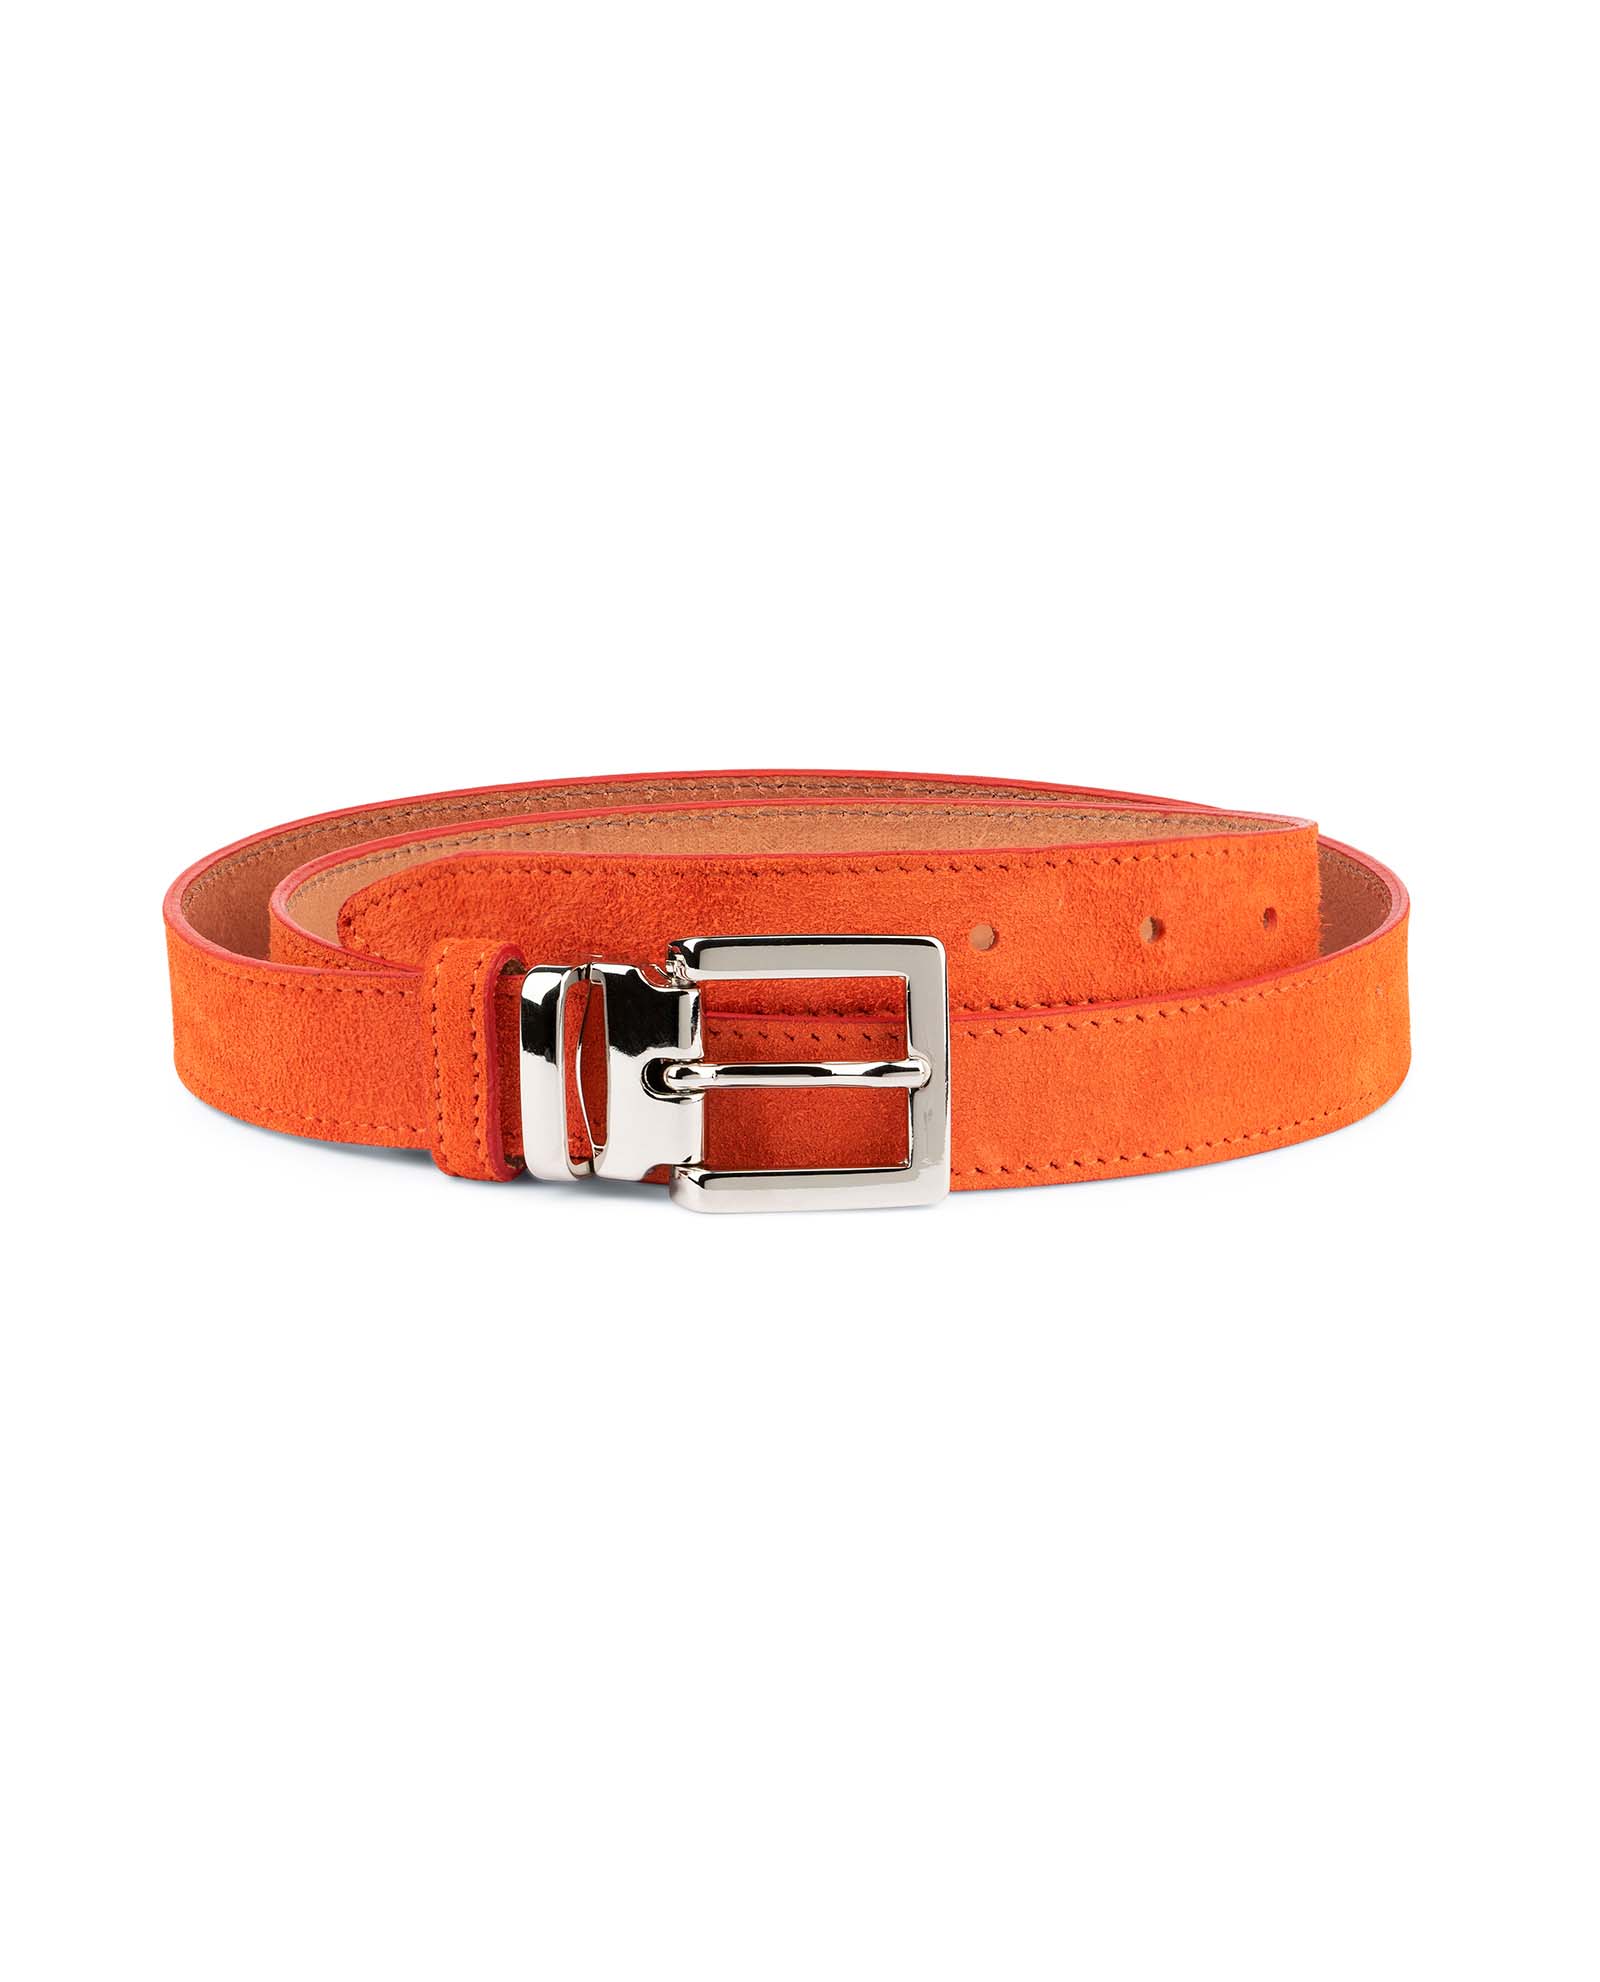 Rust Suede Belt made in the USA-Pumpkin Women's Belt-Burnt Orange Belt-Ladies 